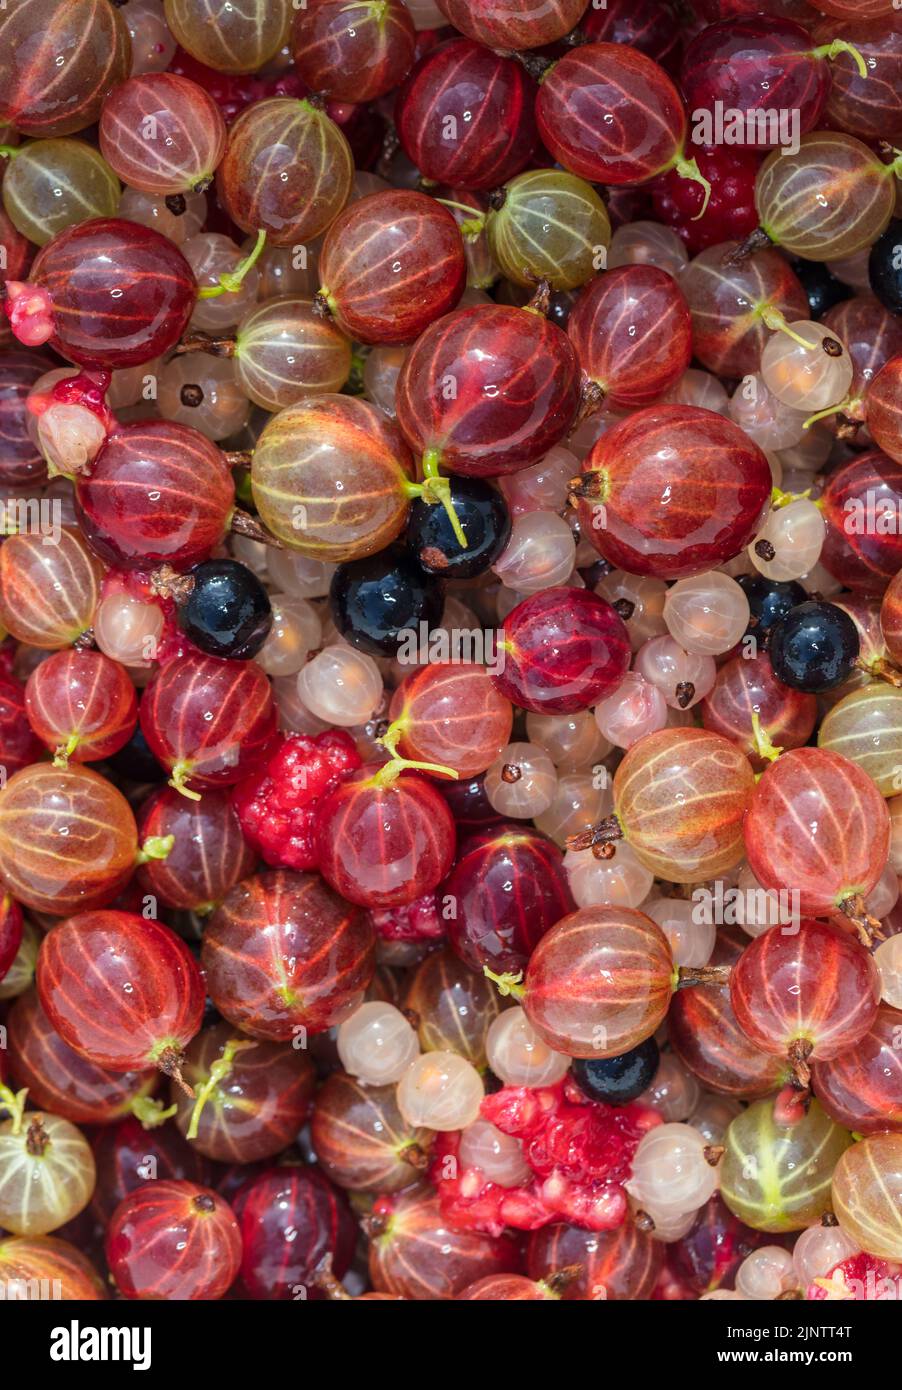 'Hinnonmäki Röd' Gooseberry, Krusbär (Ribes uva-crispa) Stock Photo